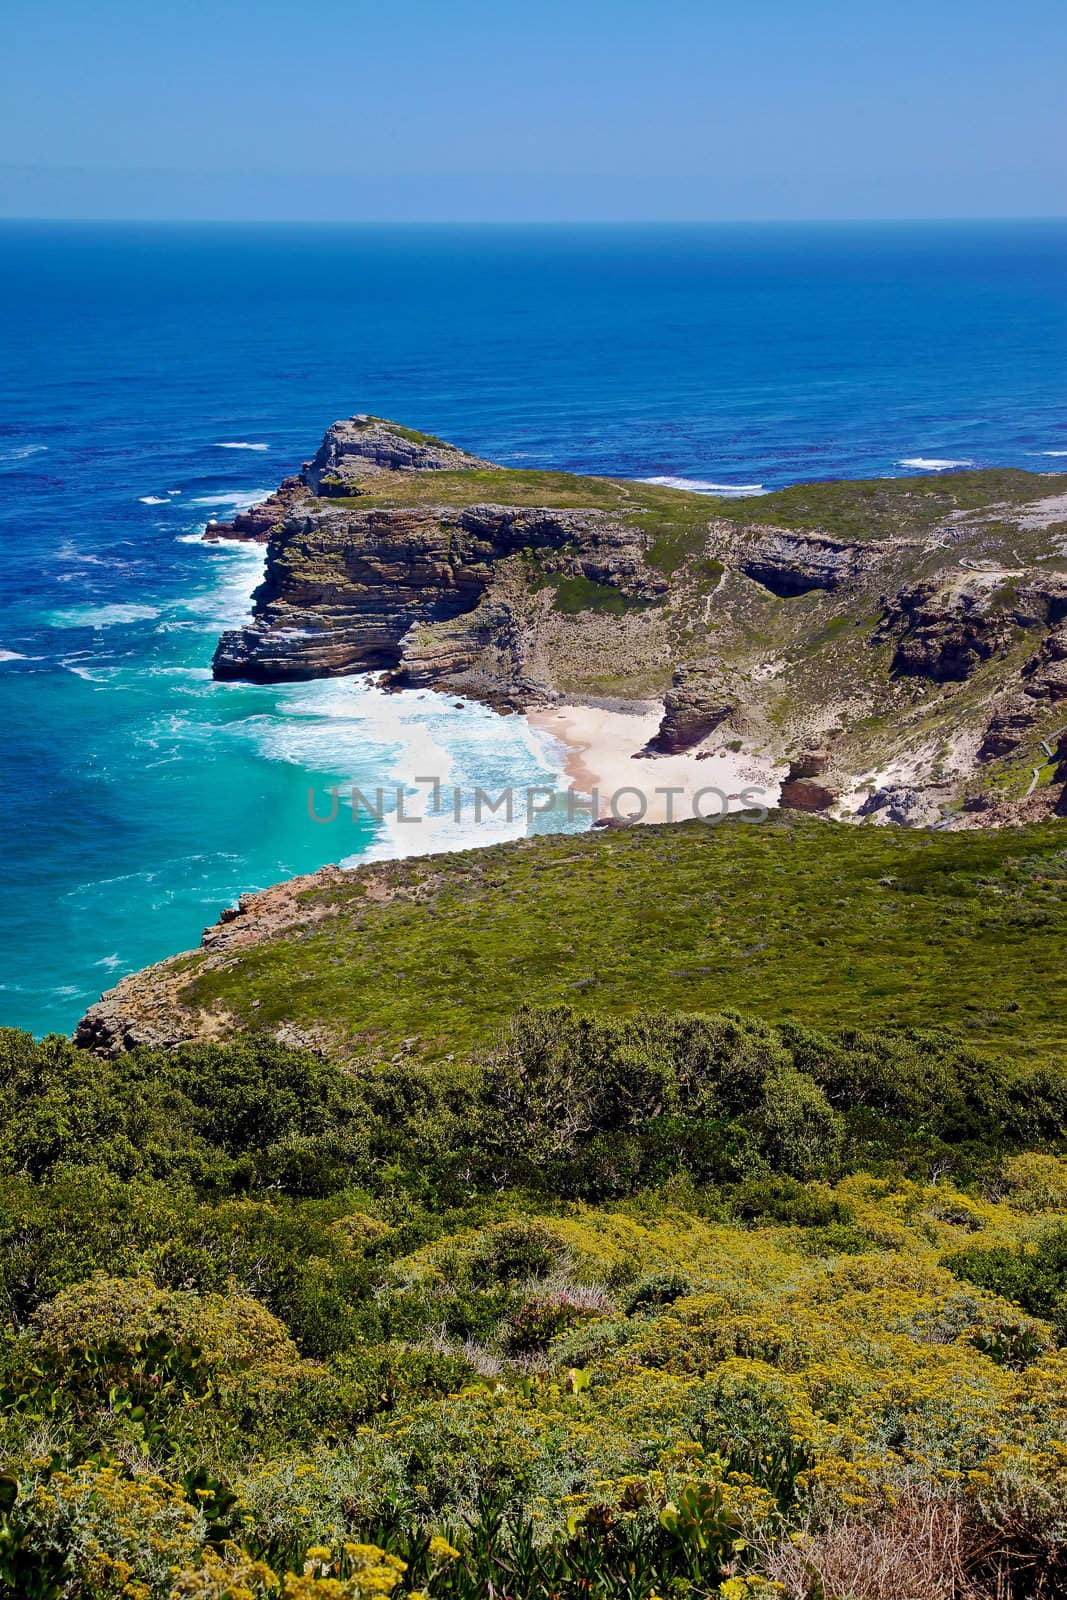 Diaz Beach (aka The Cape of Good Hope), adjacent to Cape Point, South Africa.